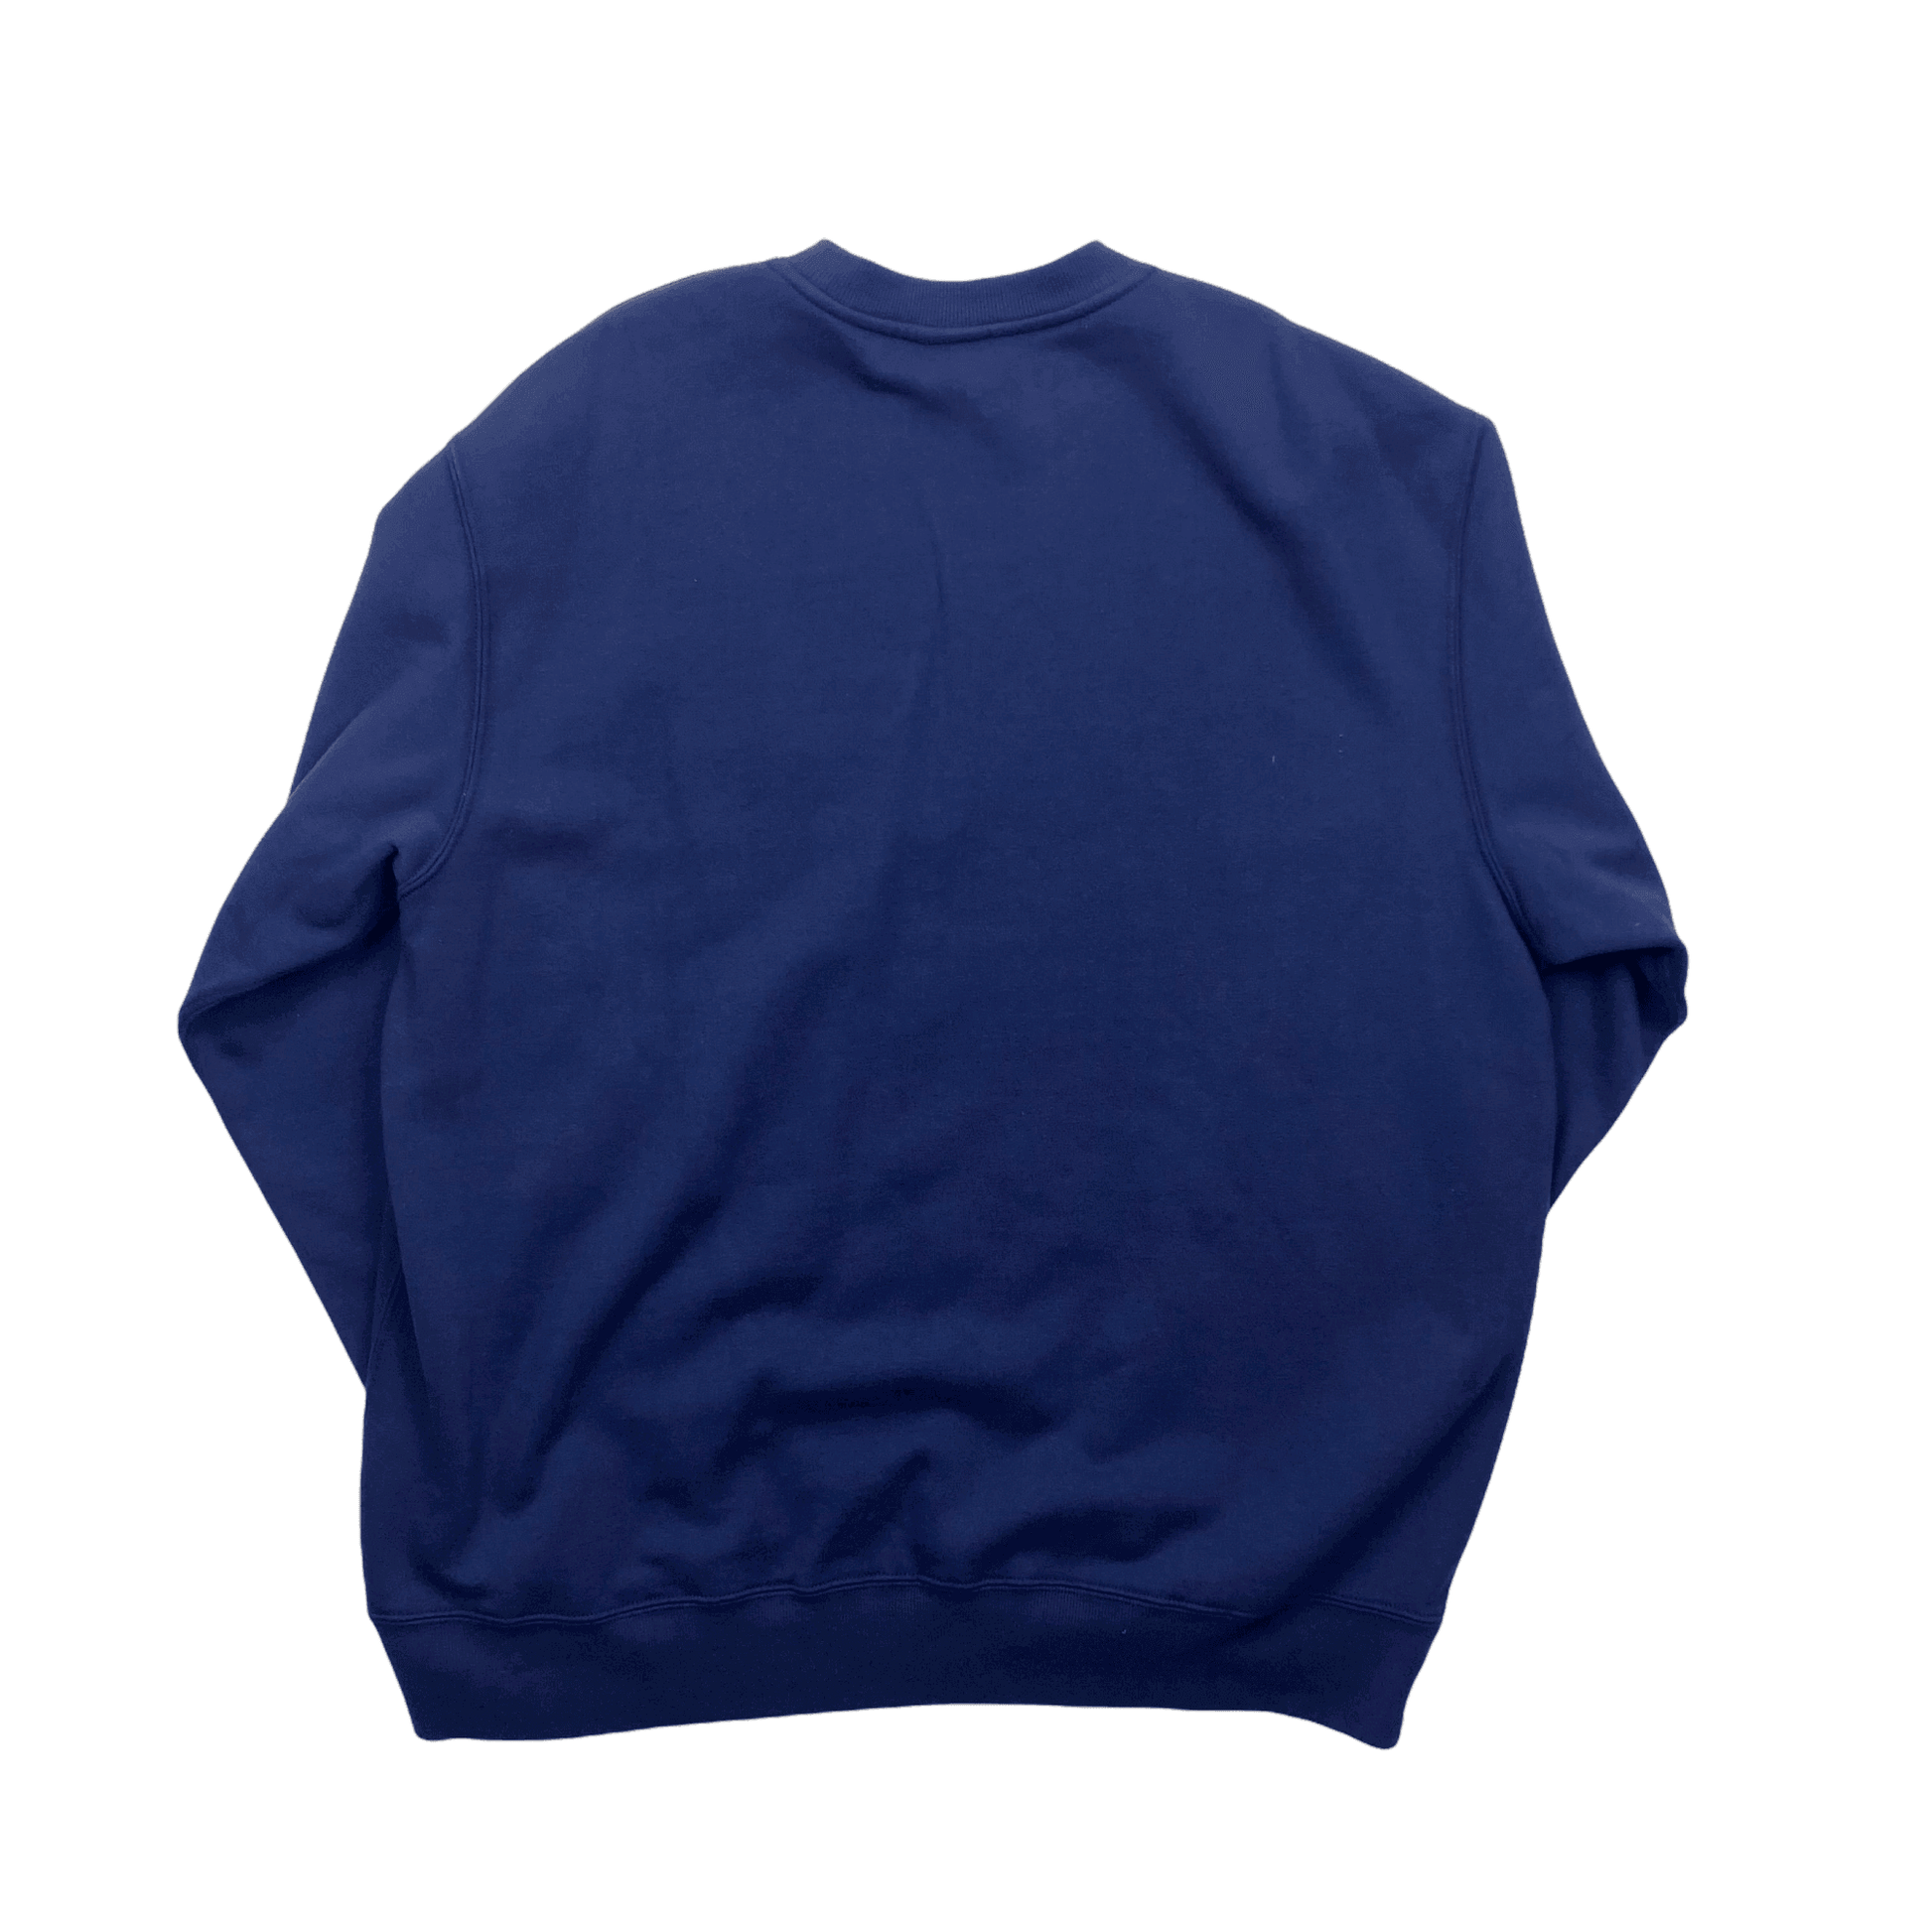 Navy Blue Nike x Supreme Sweatshirt - Extra Large - The Streetwear Studio